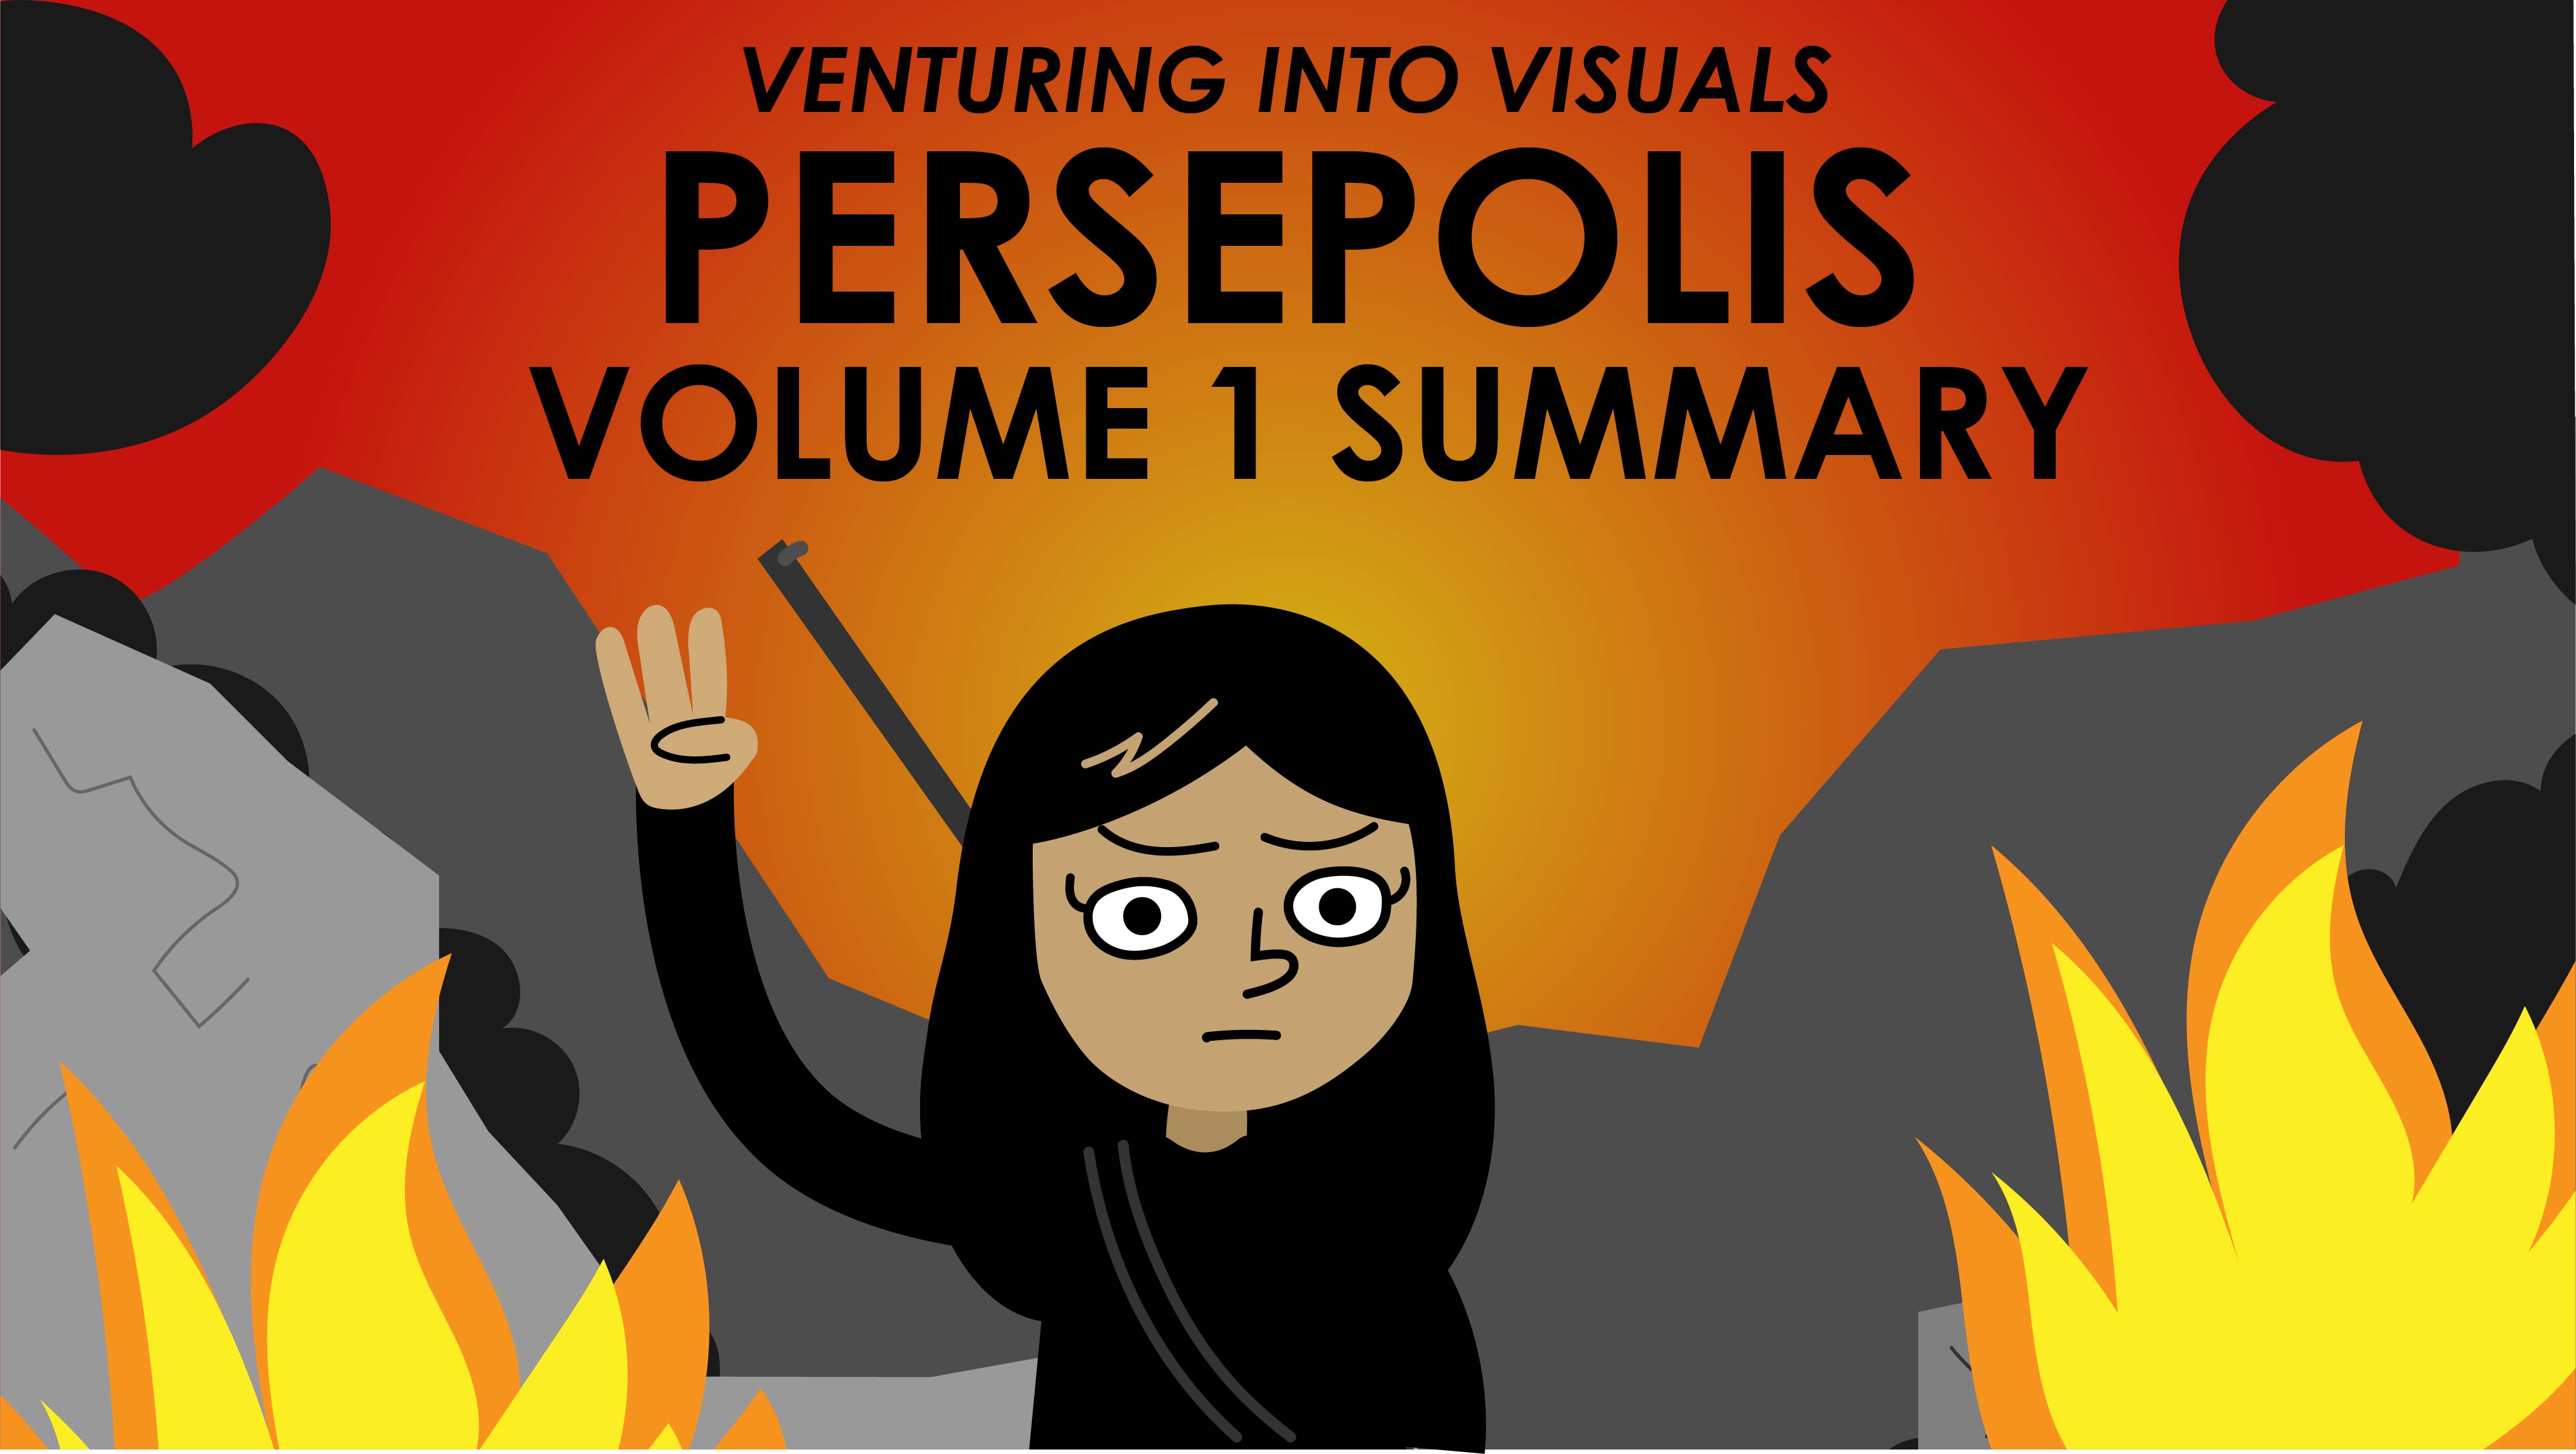 Persepolis - Marjane Satrapi - Volume 1 Summary - Venturing Into Visuals Series